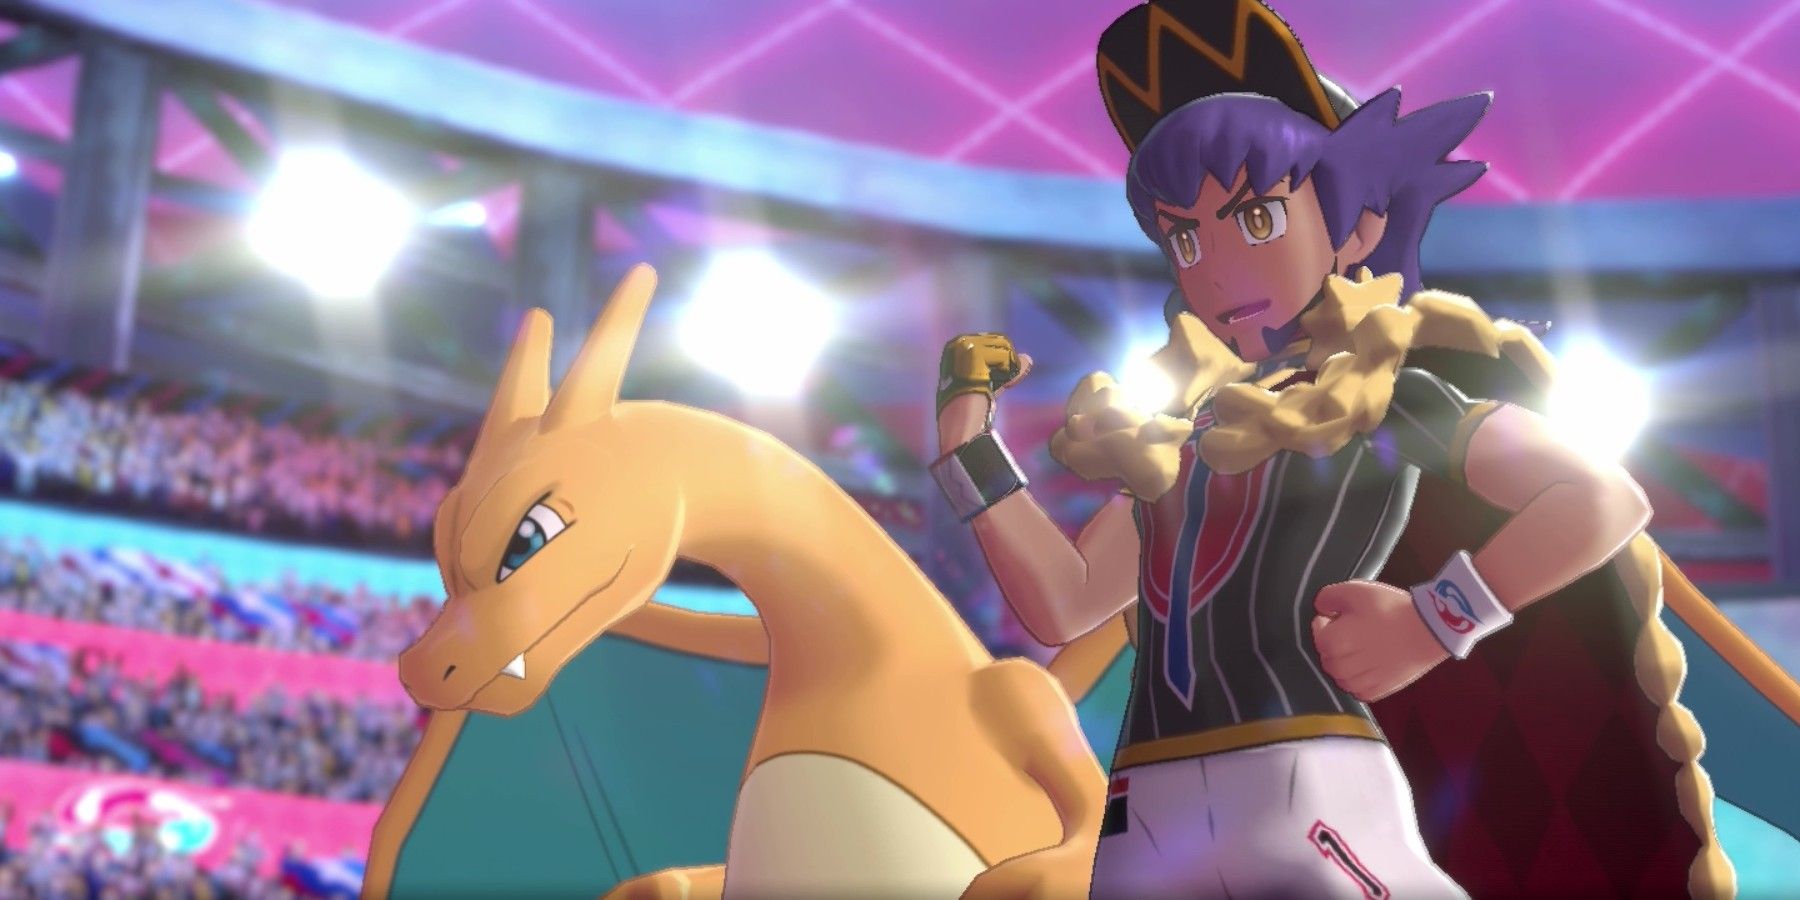 Leon with his Charizard in Pokémon Sword & Shield